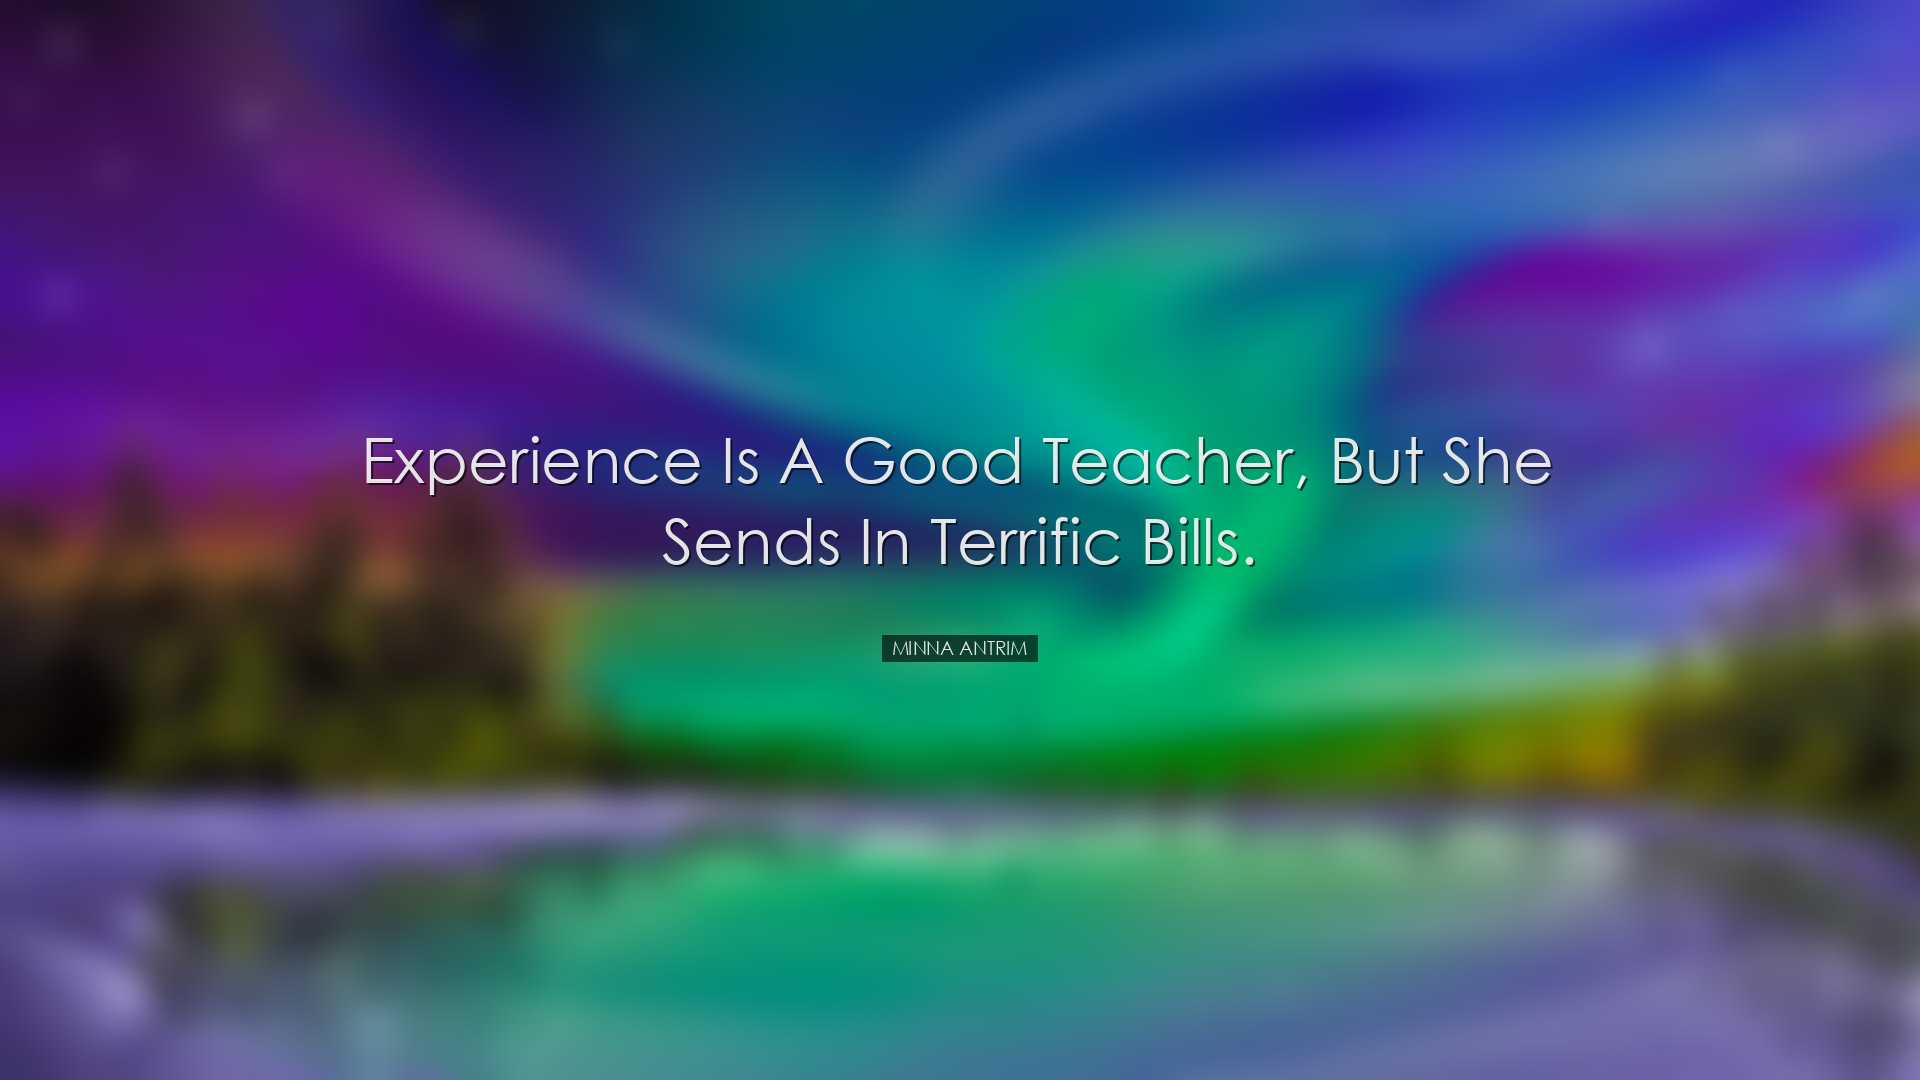 Experience is a good teacher, but she sends in terrific bills. - M